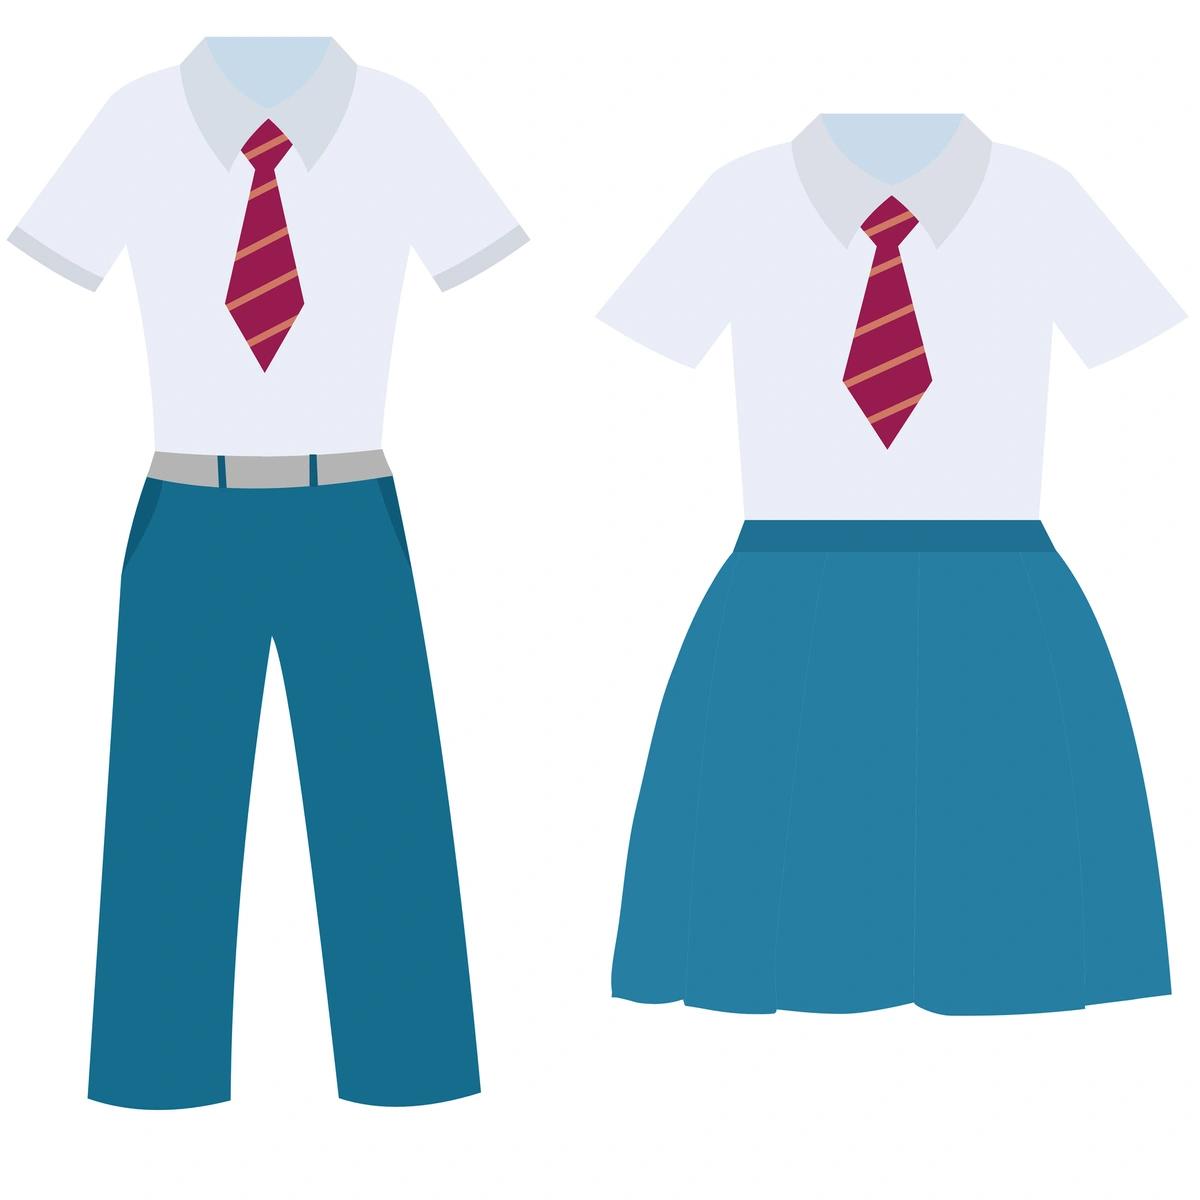 Illustration of school uniforms